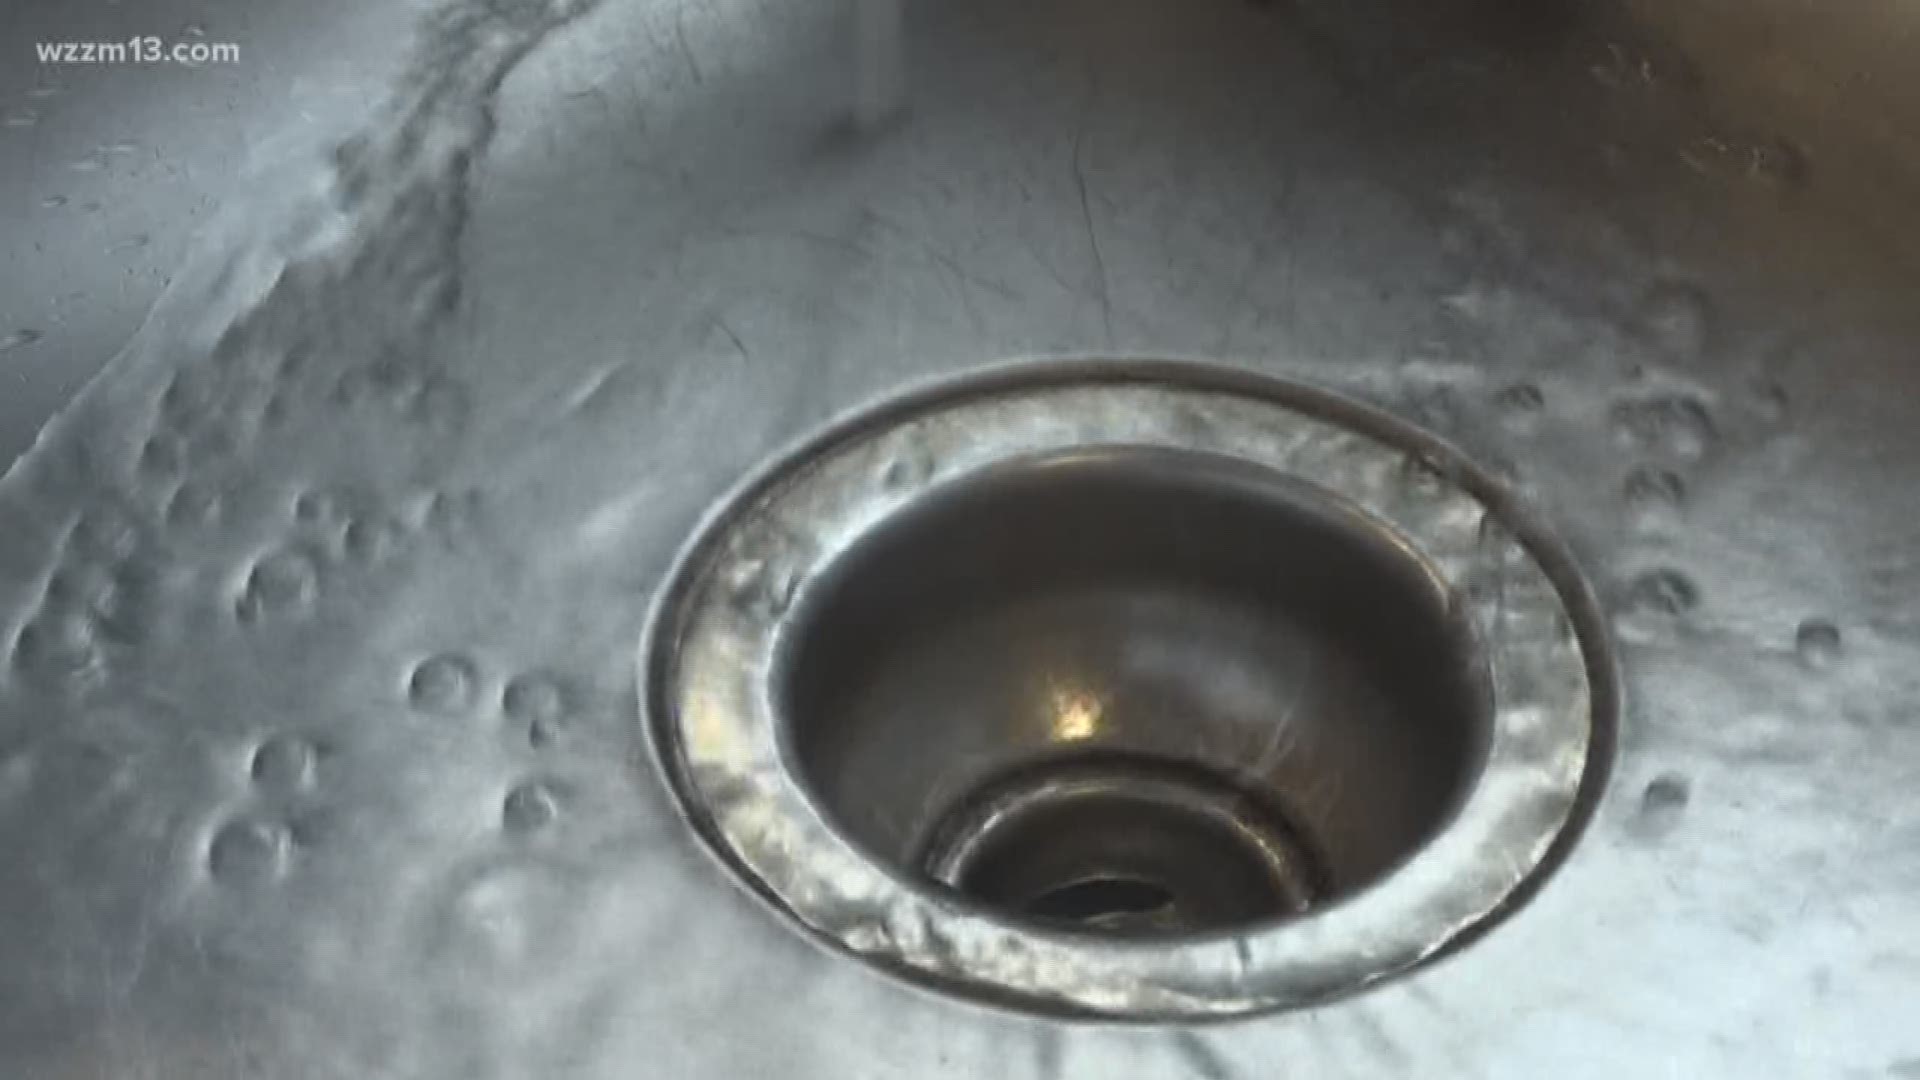 Source: Michigan reaches $600M deal in Flint water crisis